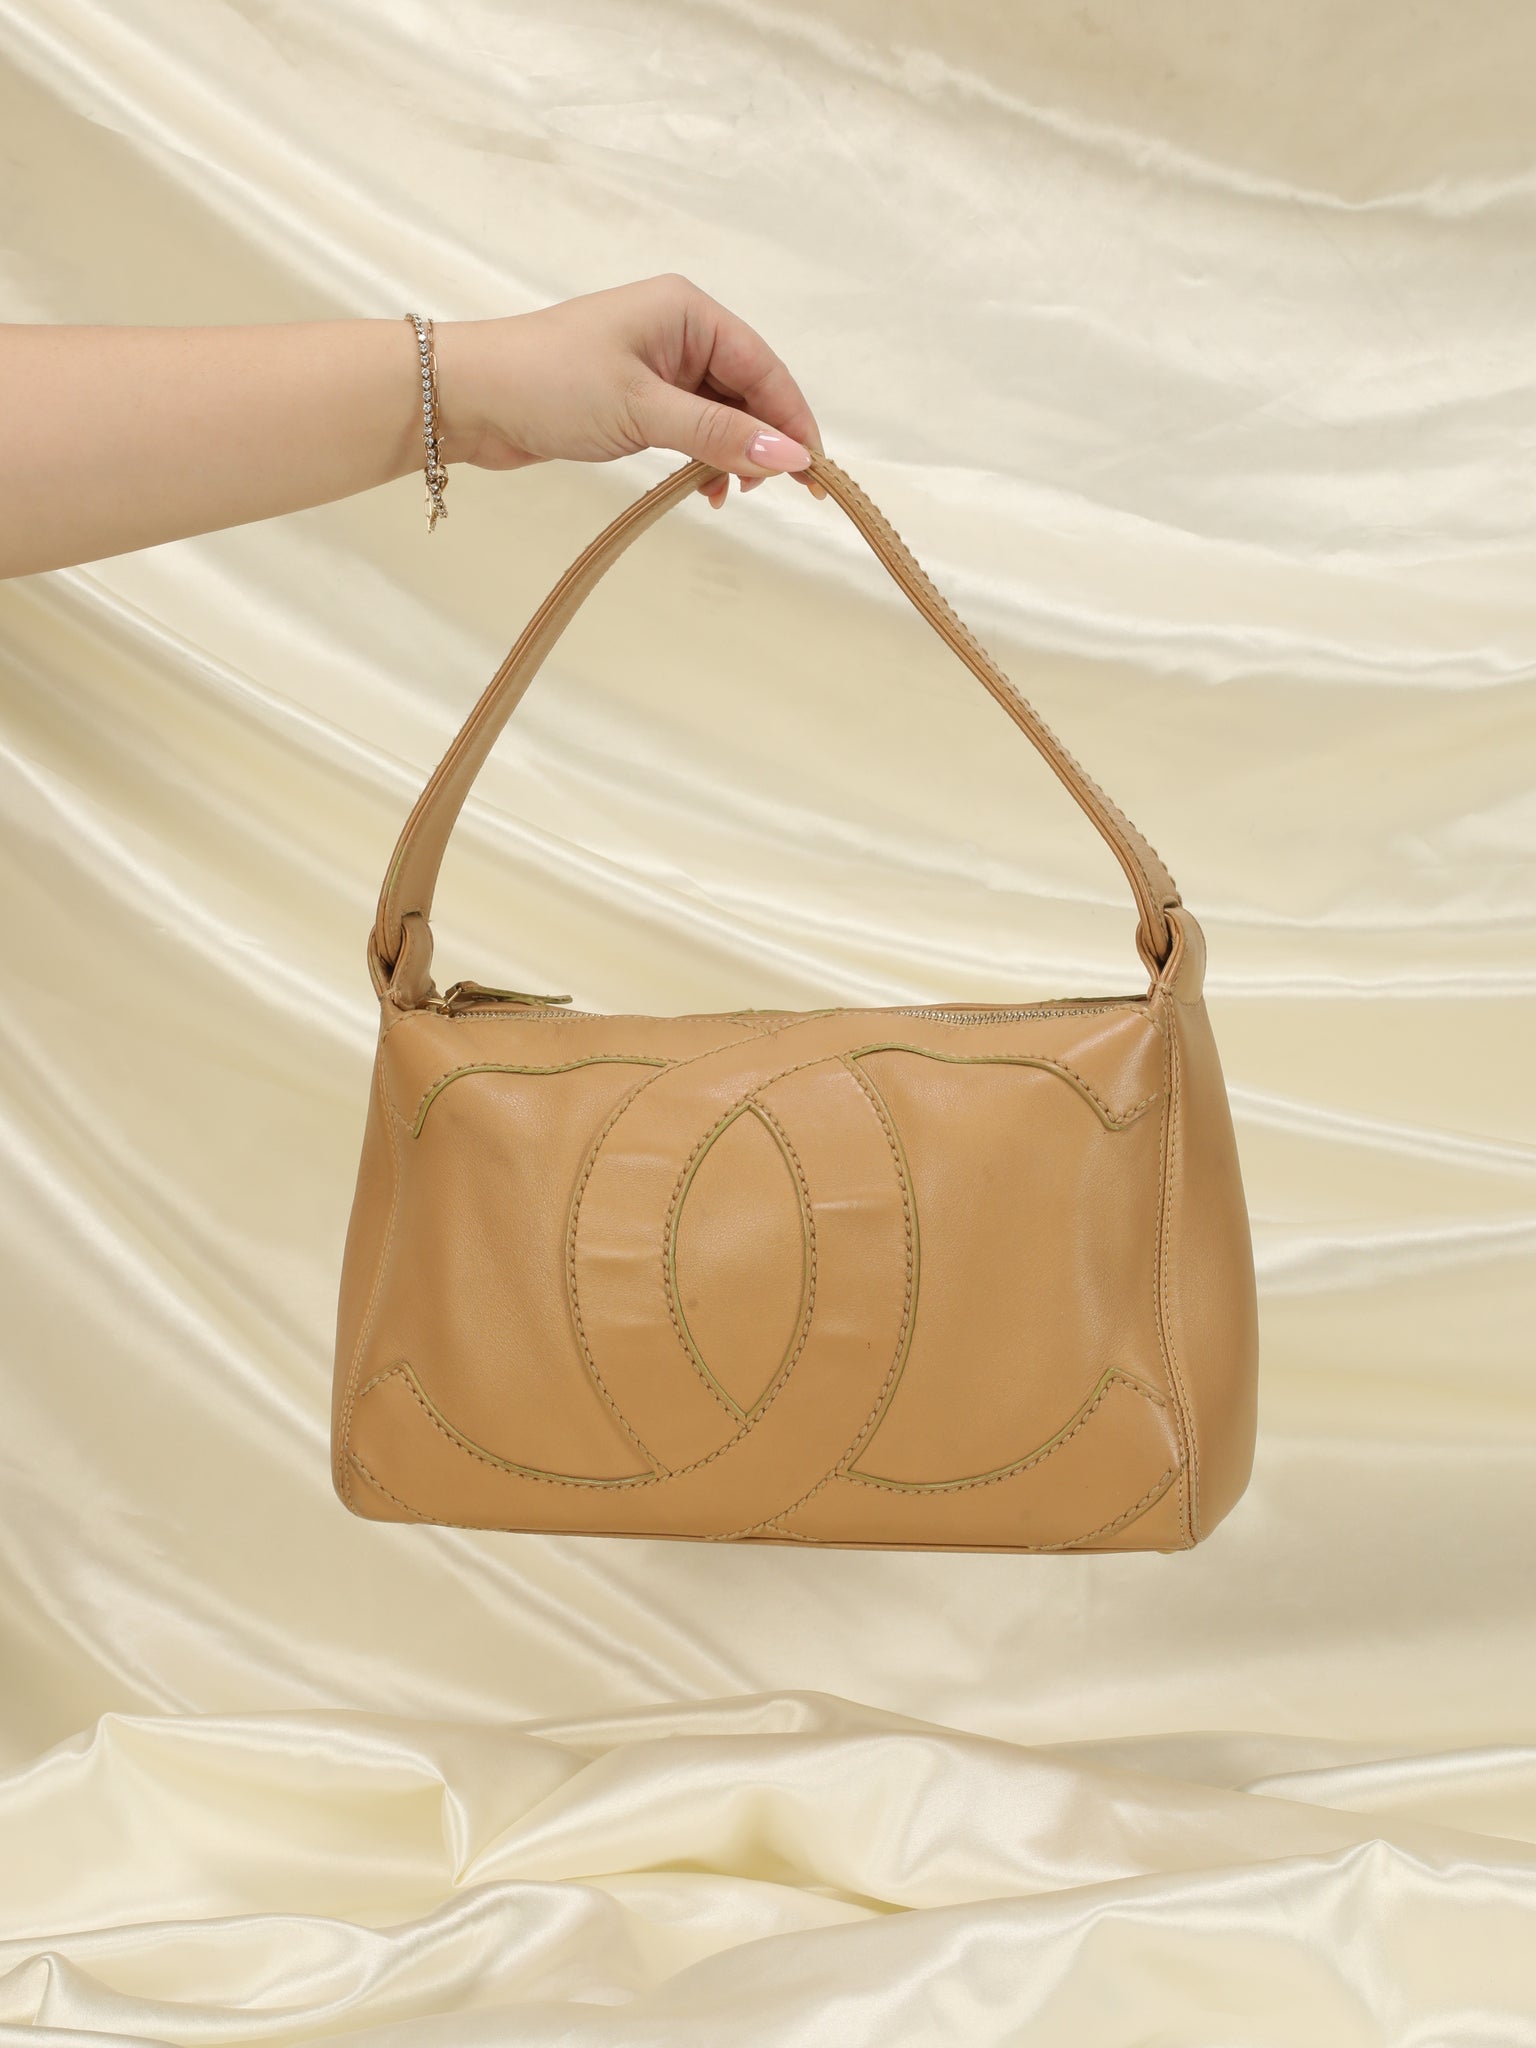 Chanel Surpique Hobo Bag